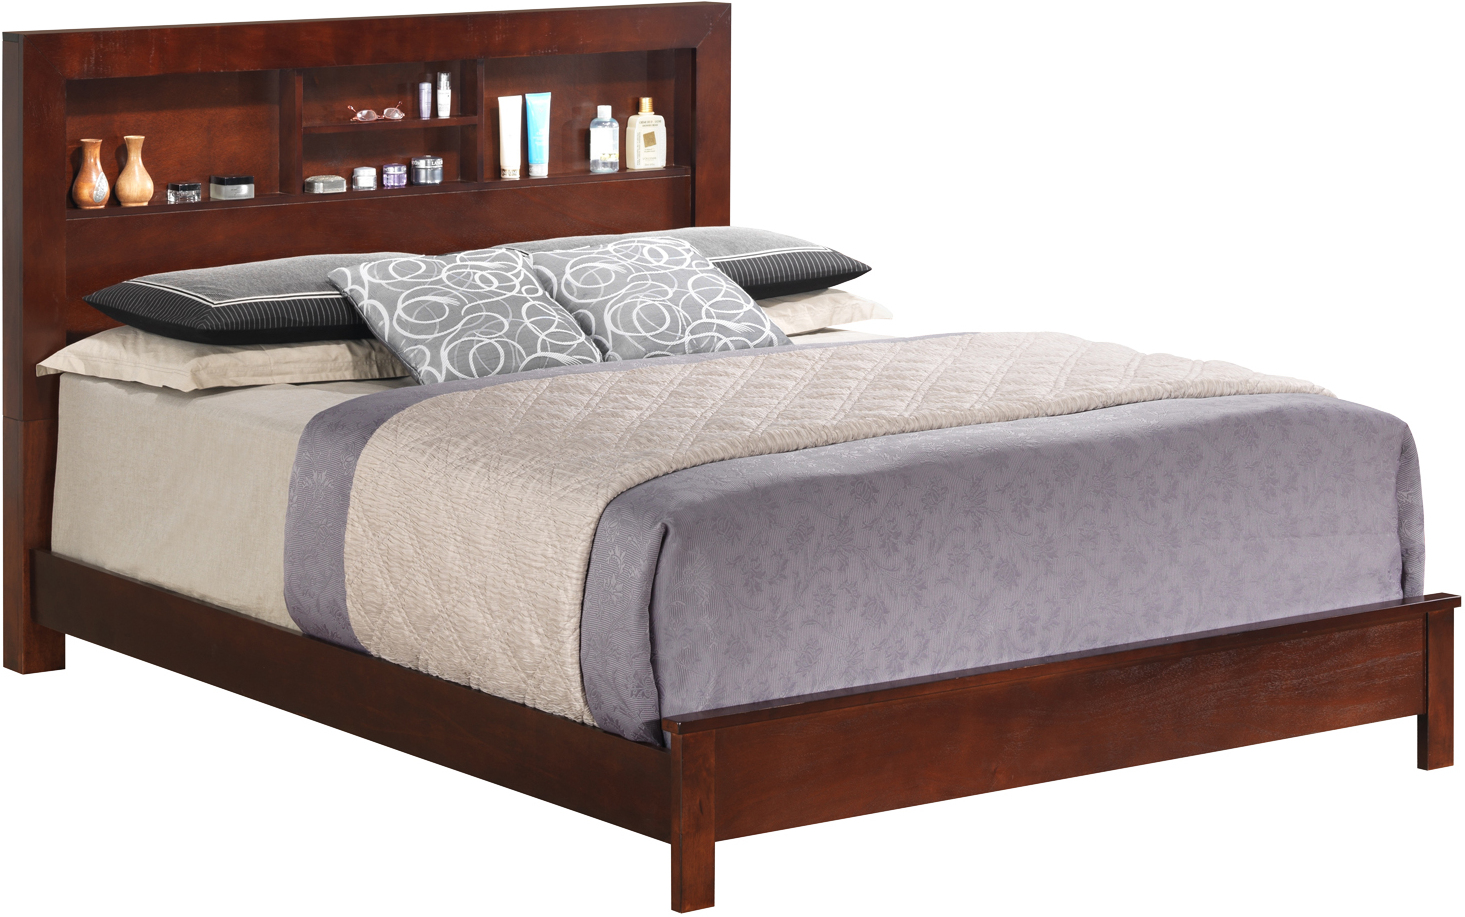 Glory Furniture G2400 King Bookcase Headboard Bed In Cherry G2400b